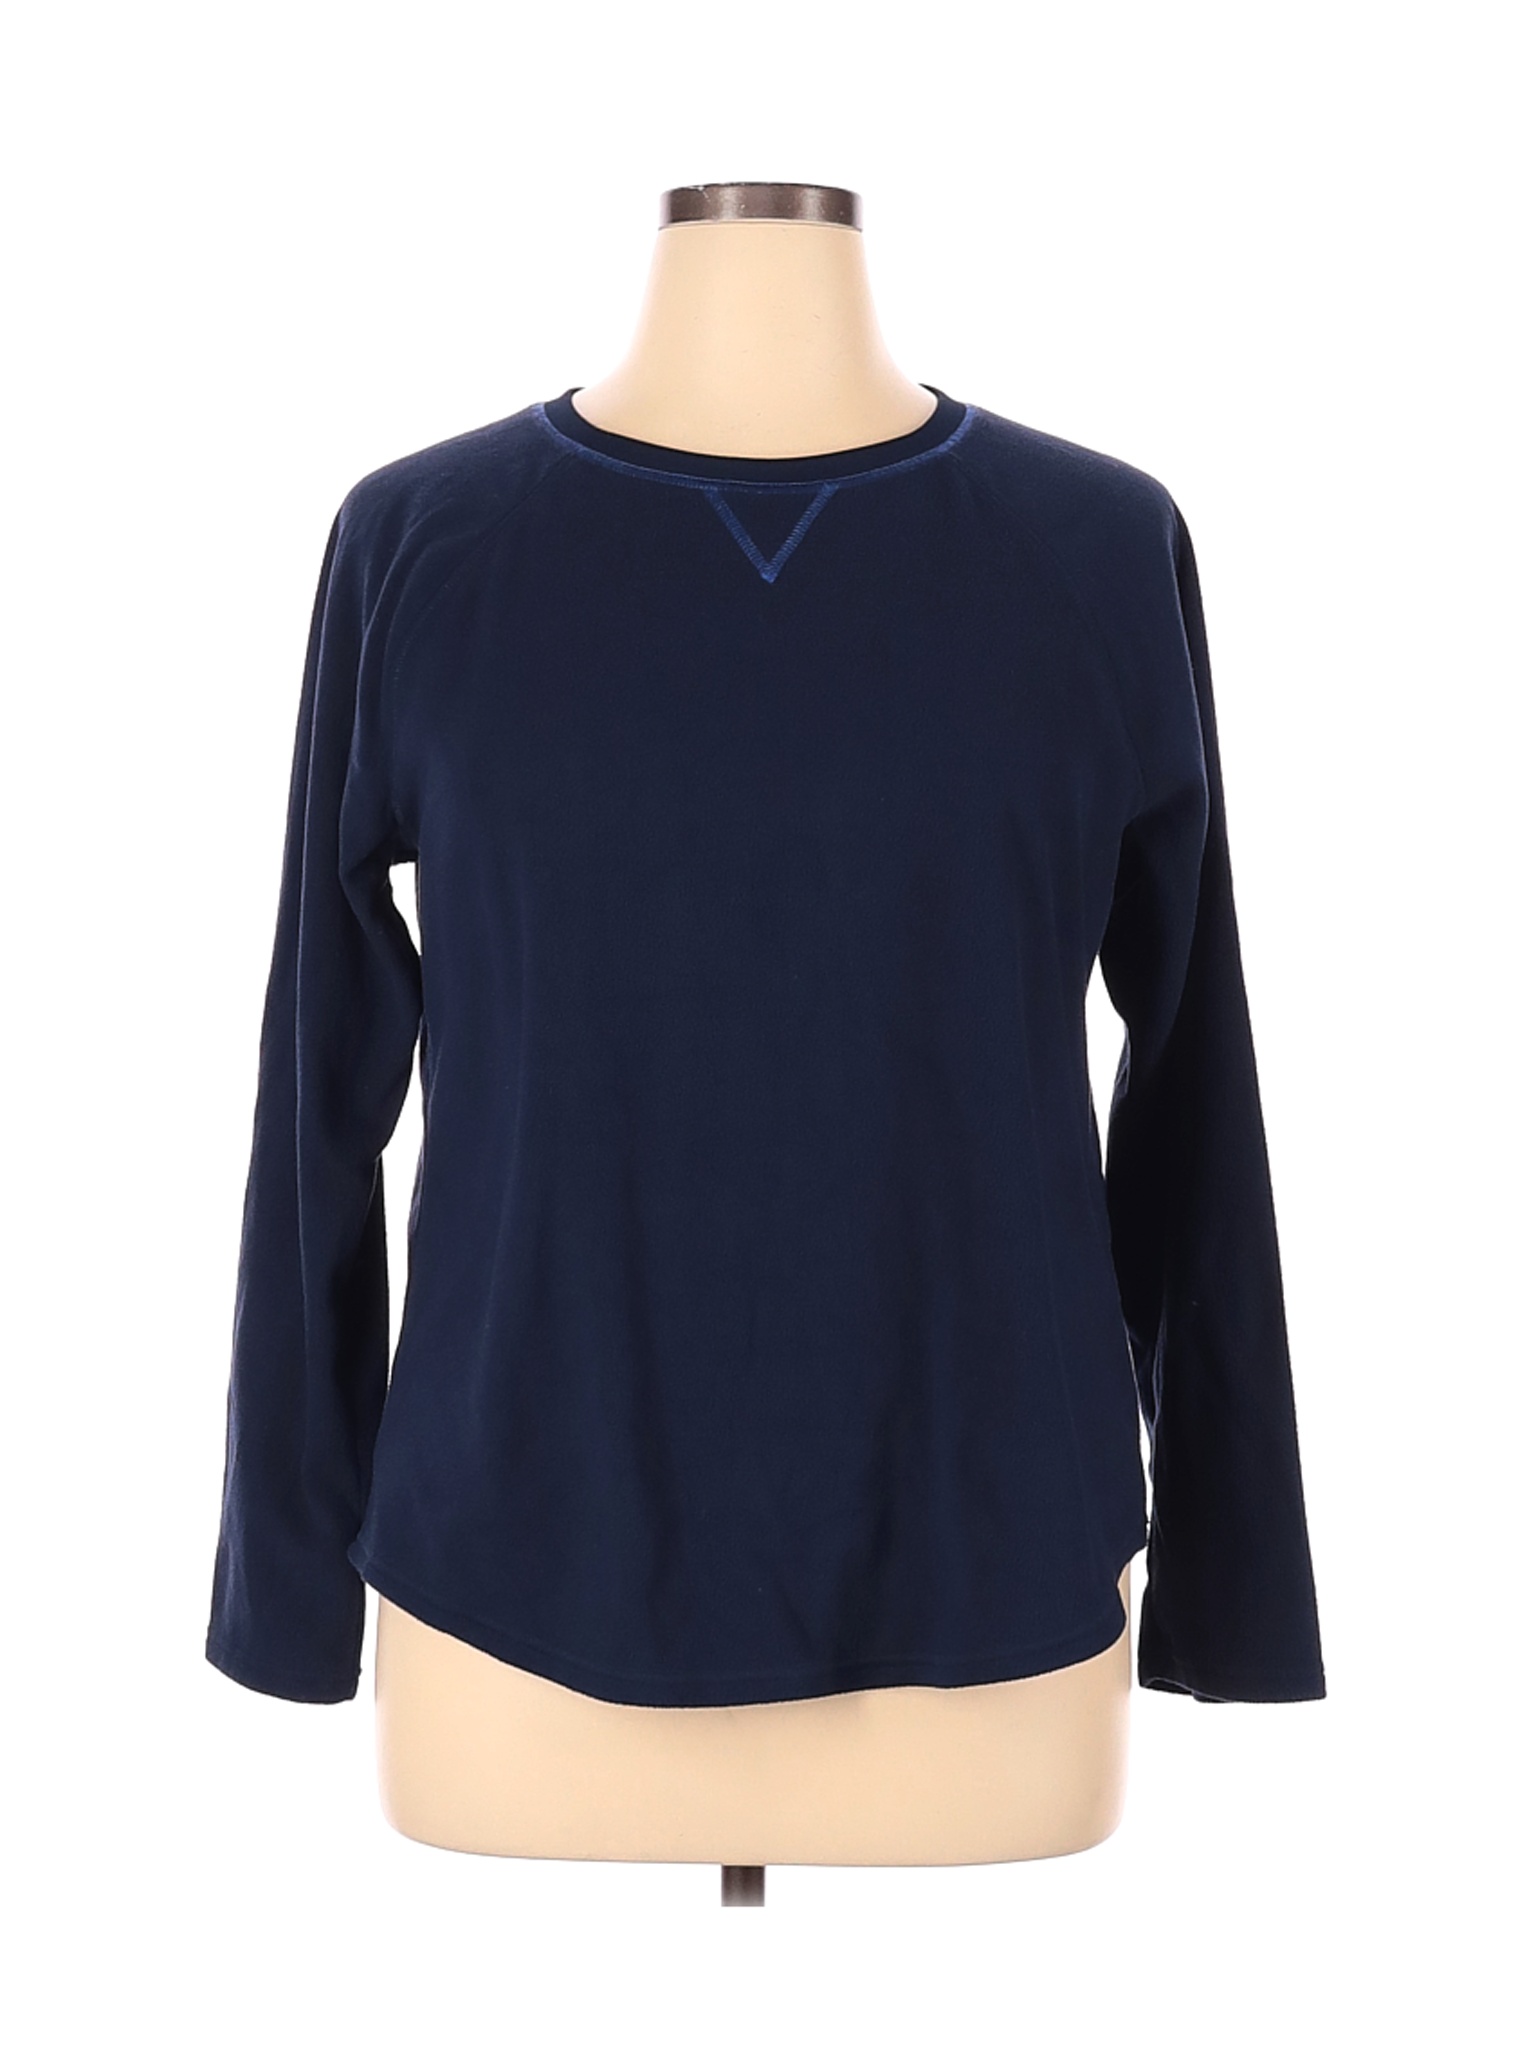 SONOMA life + style Women Blue Sweatshirt XL | eBay